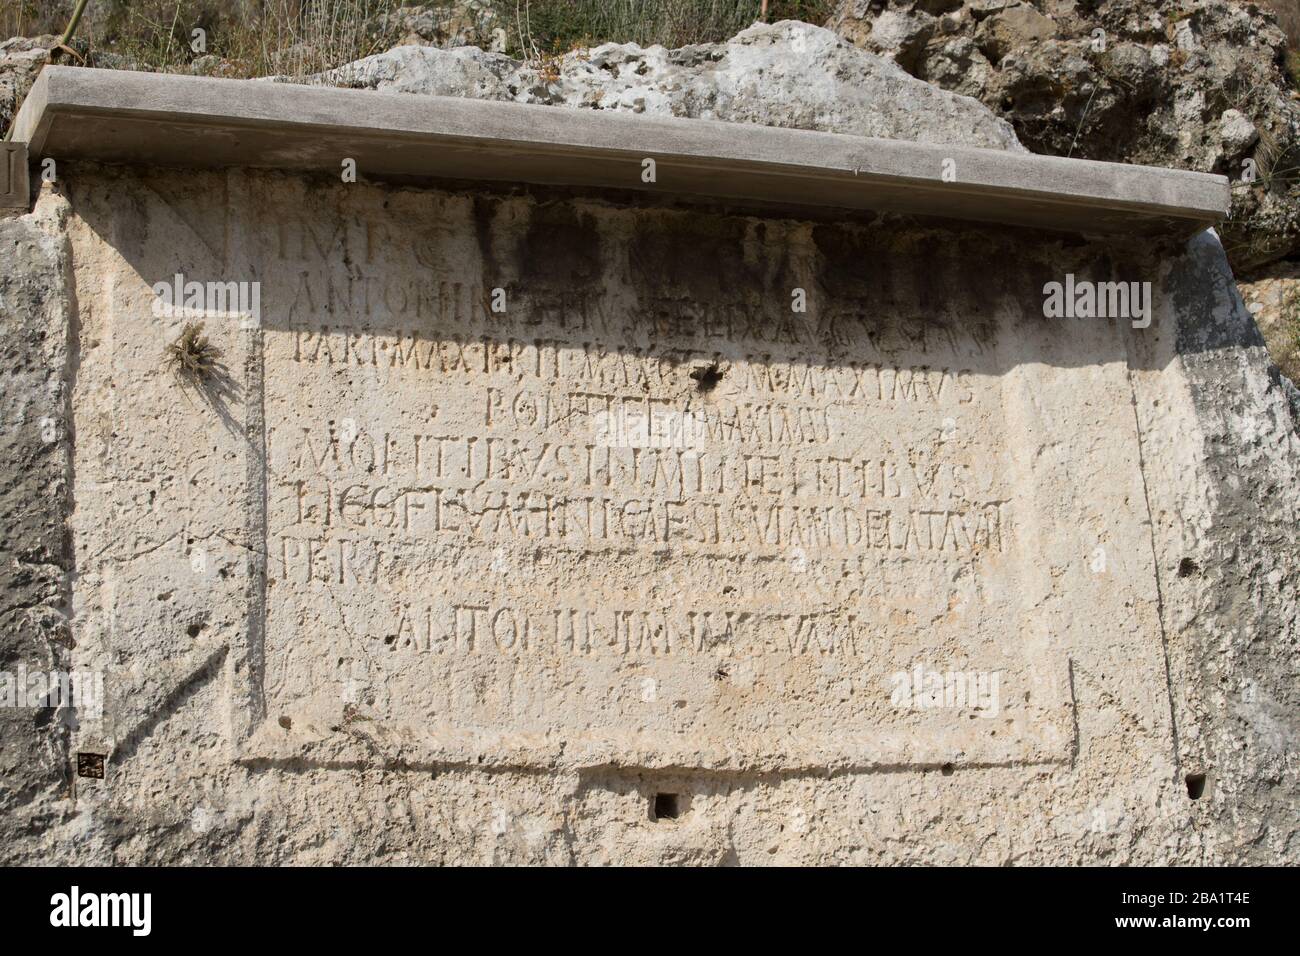 Roman inscription. Commemorative stelae of Nahr el-Kalb, Lebanon. Nahr al-Kalb is the ancient Lycus River. Lebanon - June, 2019 Stock Photo